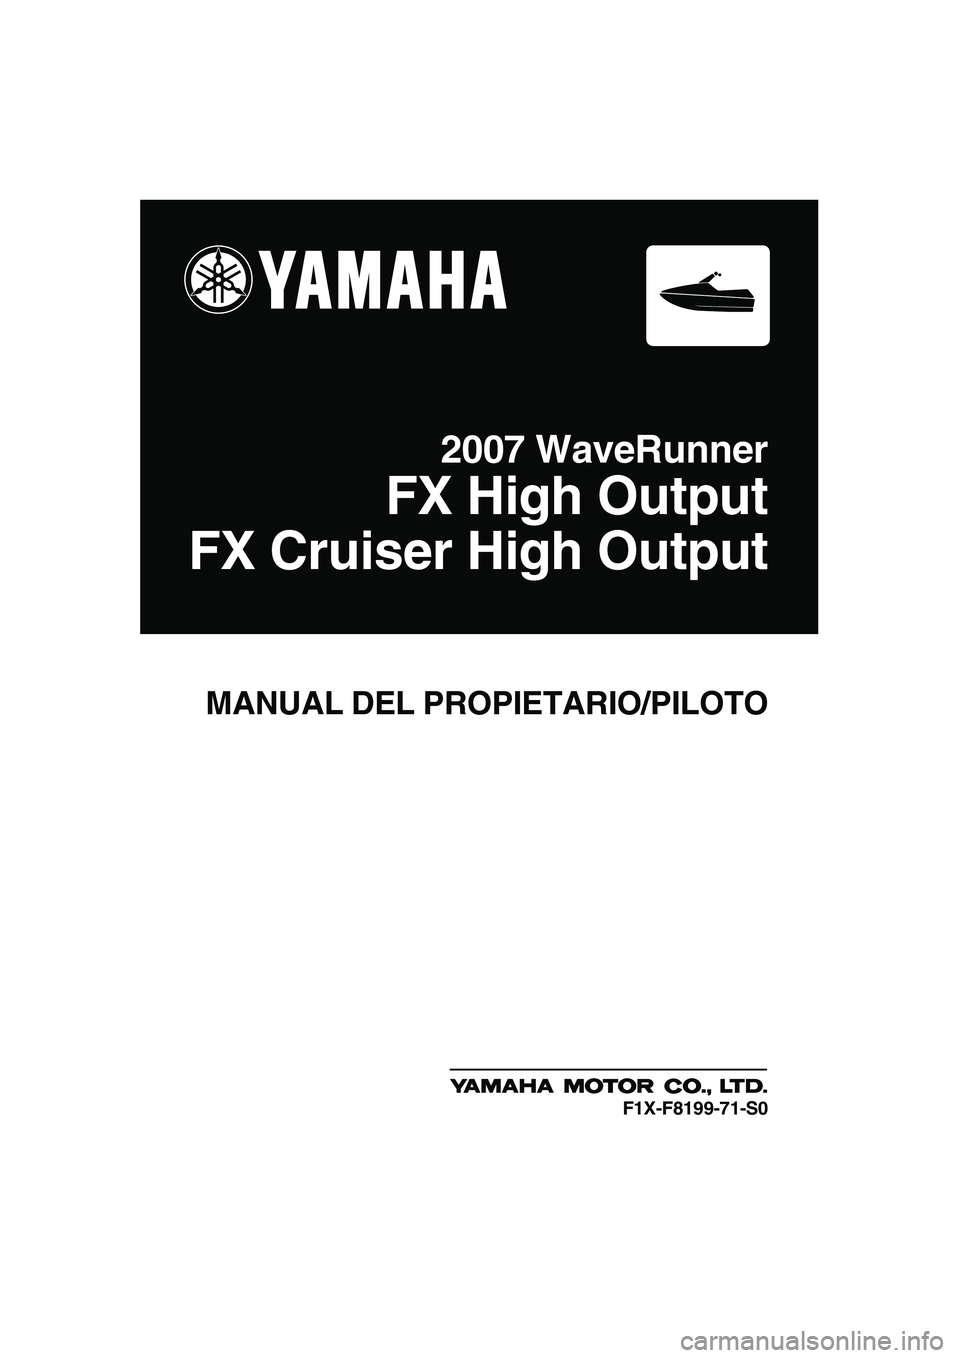 YAMAHA FX HO CRUISER 2007  Manuale de Empleo (in Spanish) 